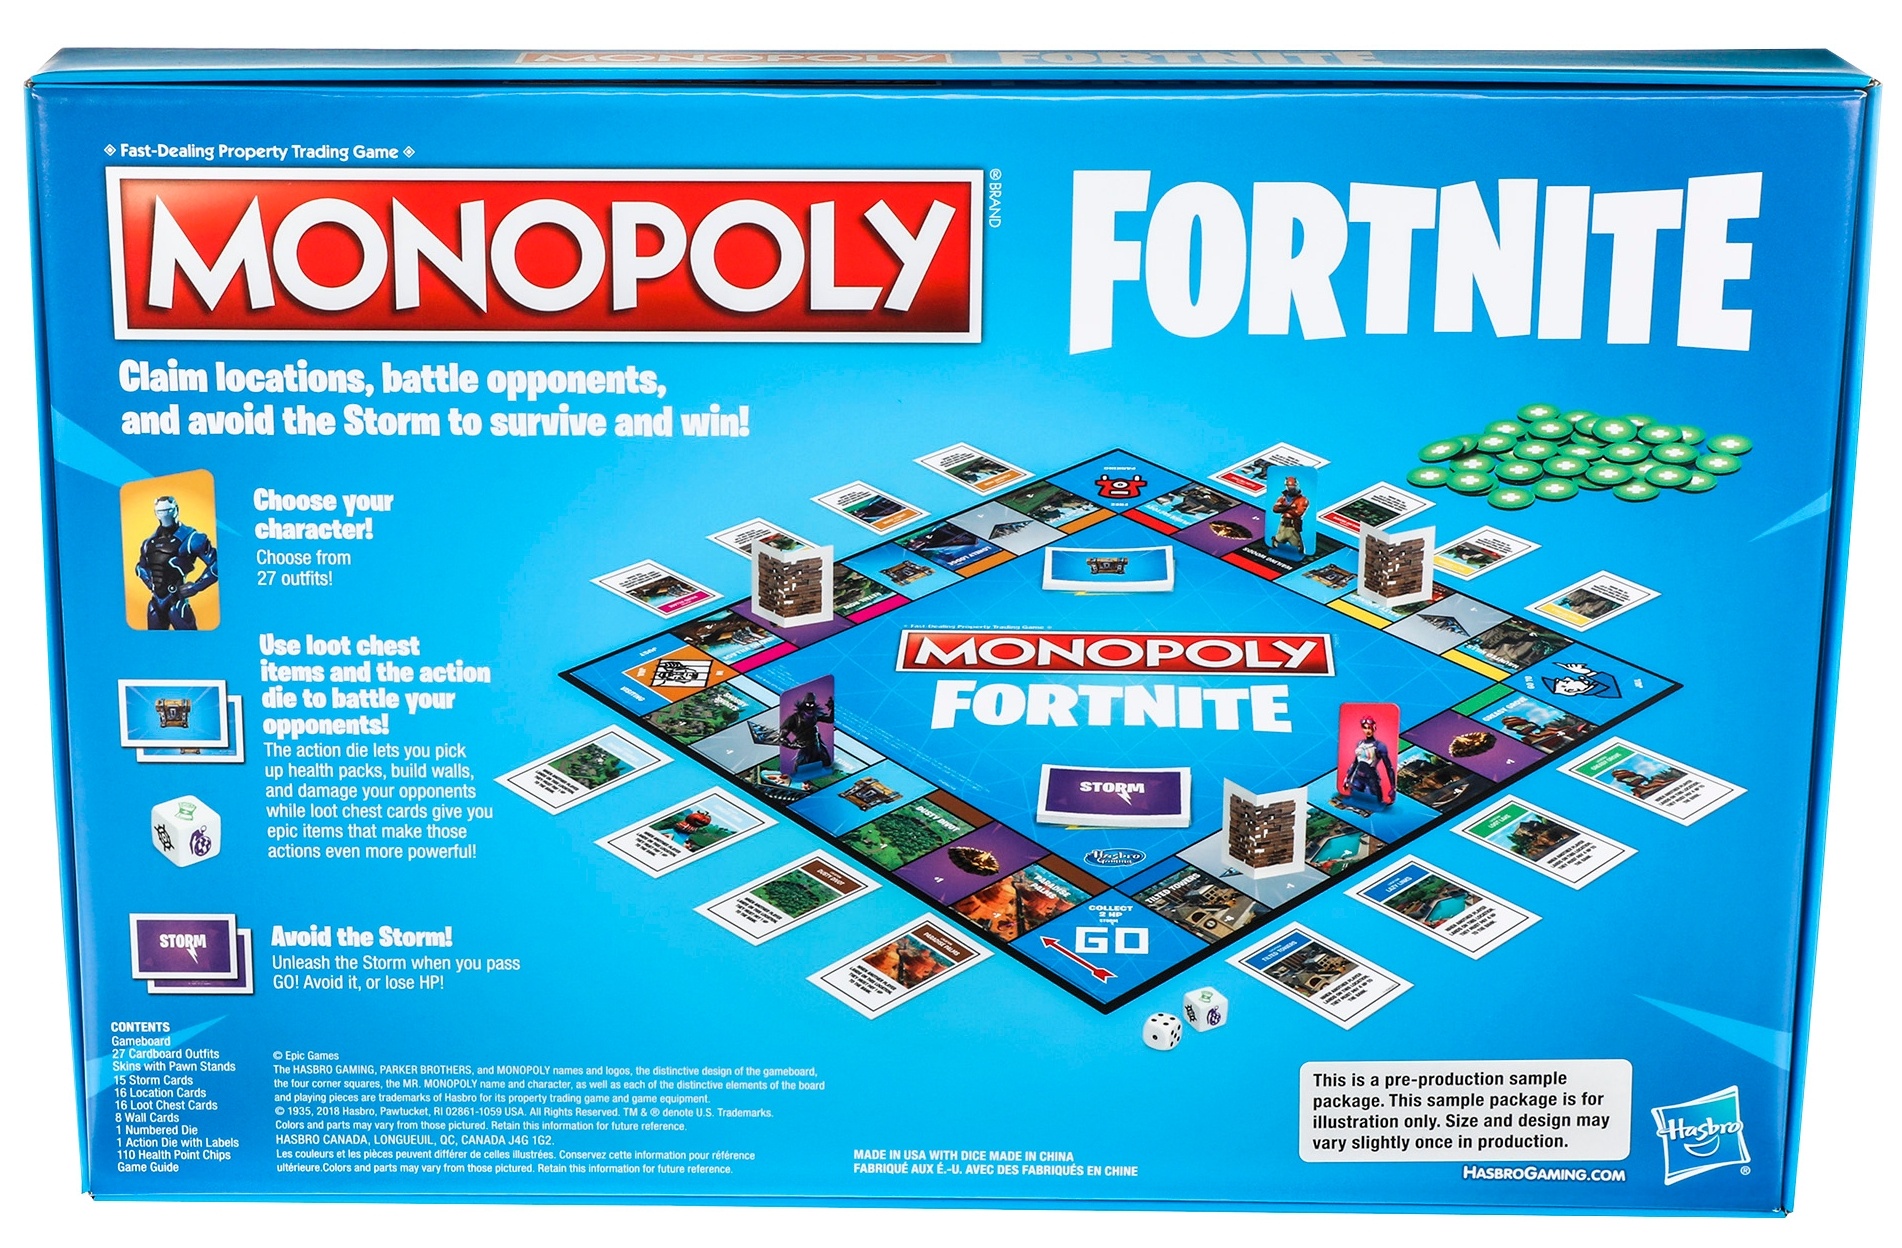 Monopoly Fortnite Edition Board Game Hasbro 2018 NEW